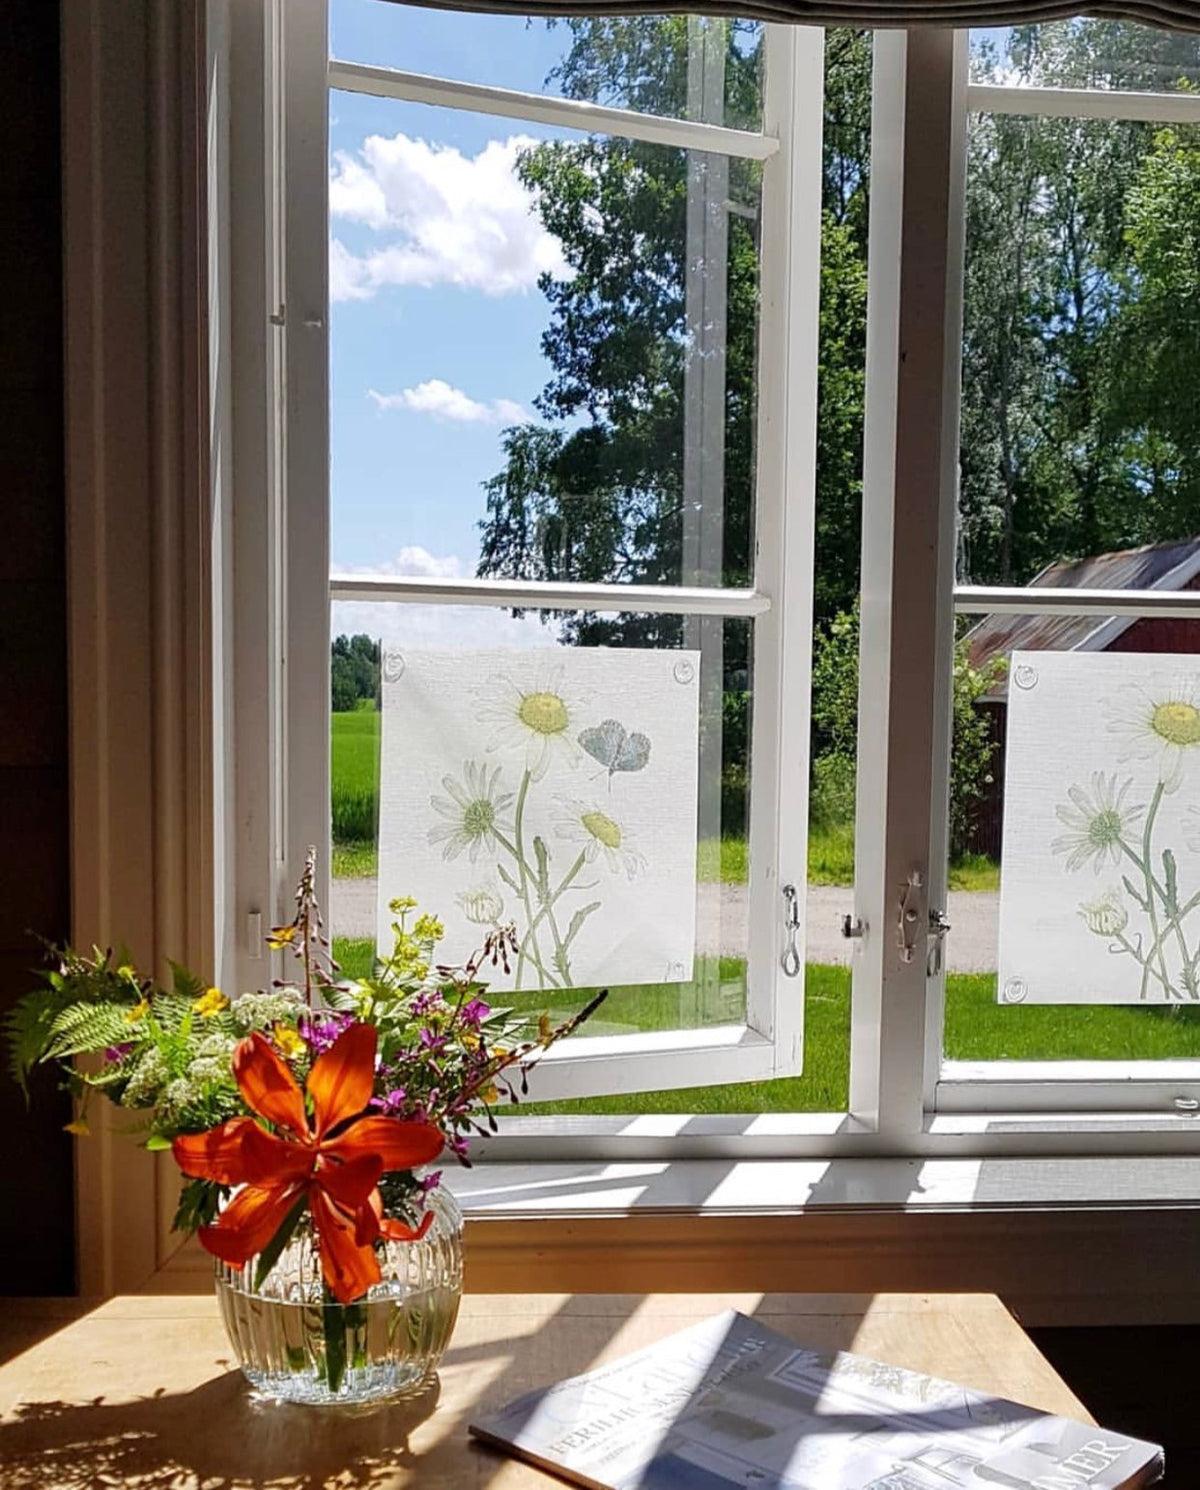 Emma Sjodin: Windowshade (31 x 31cm) Daisies